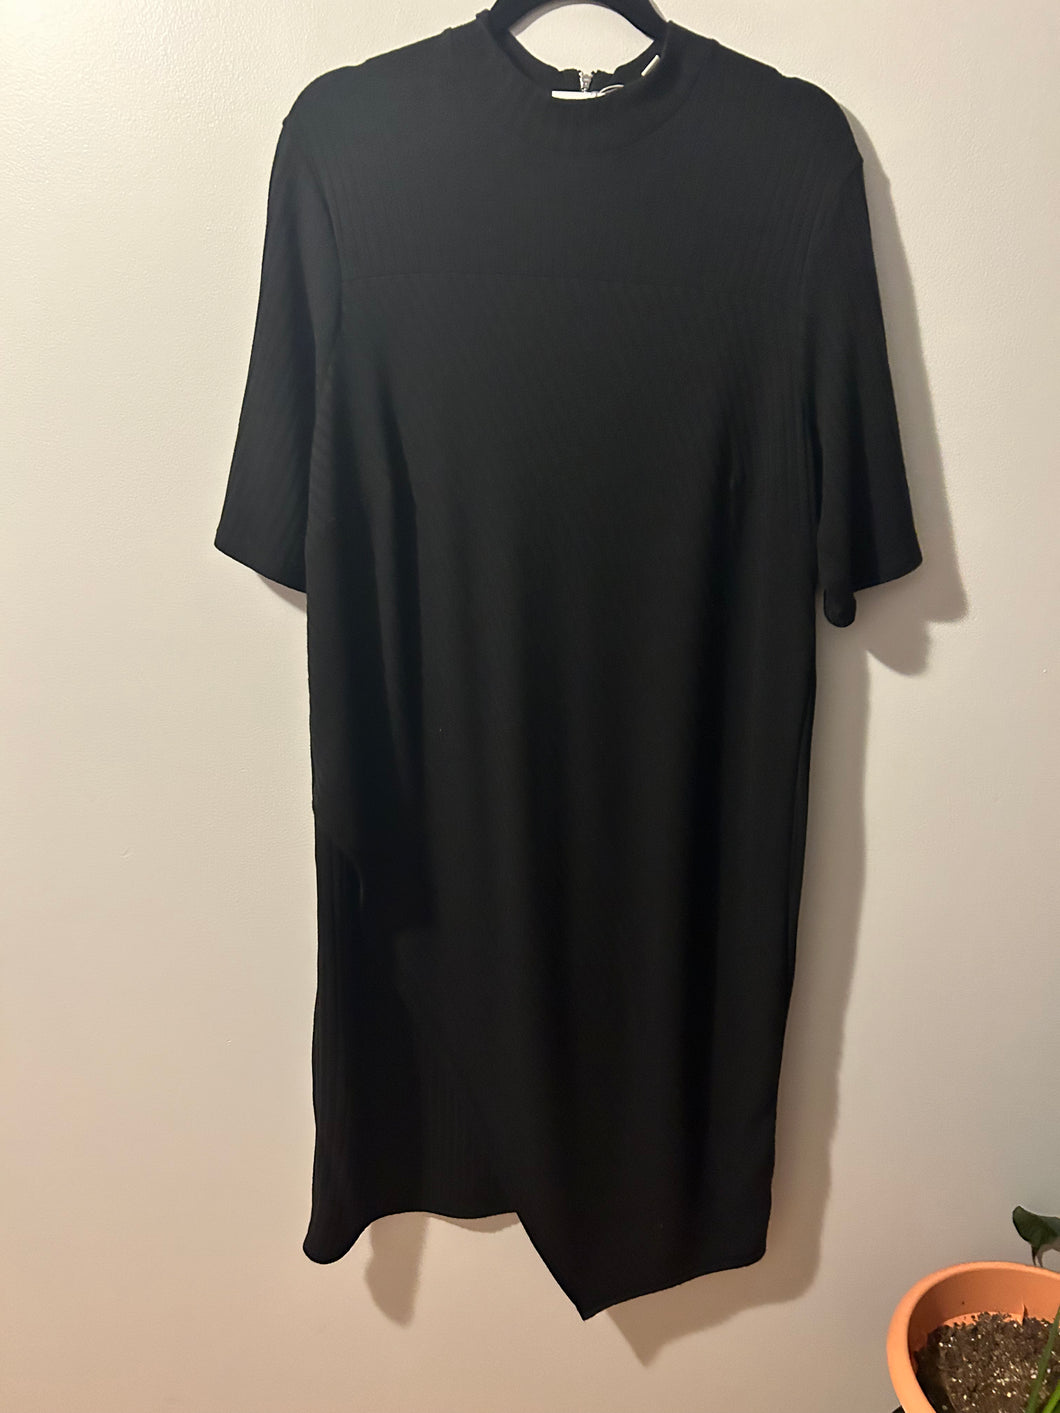 Cato Ribbed Black Dress